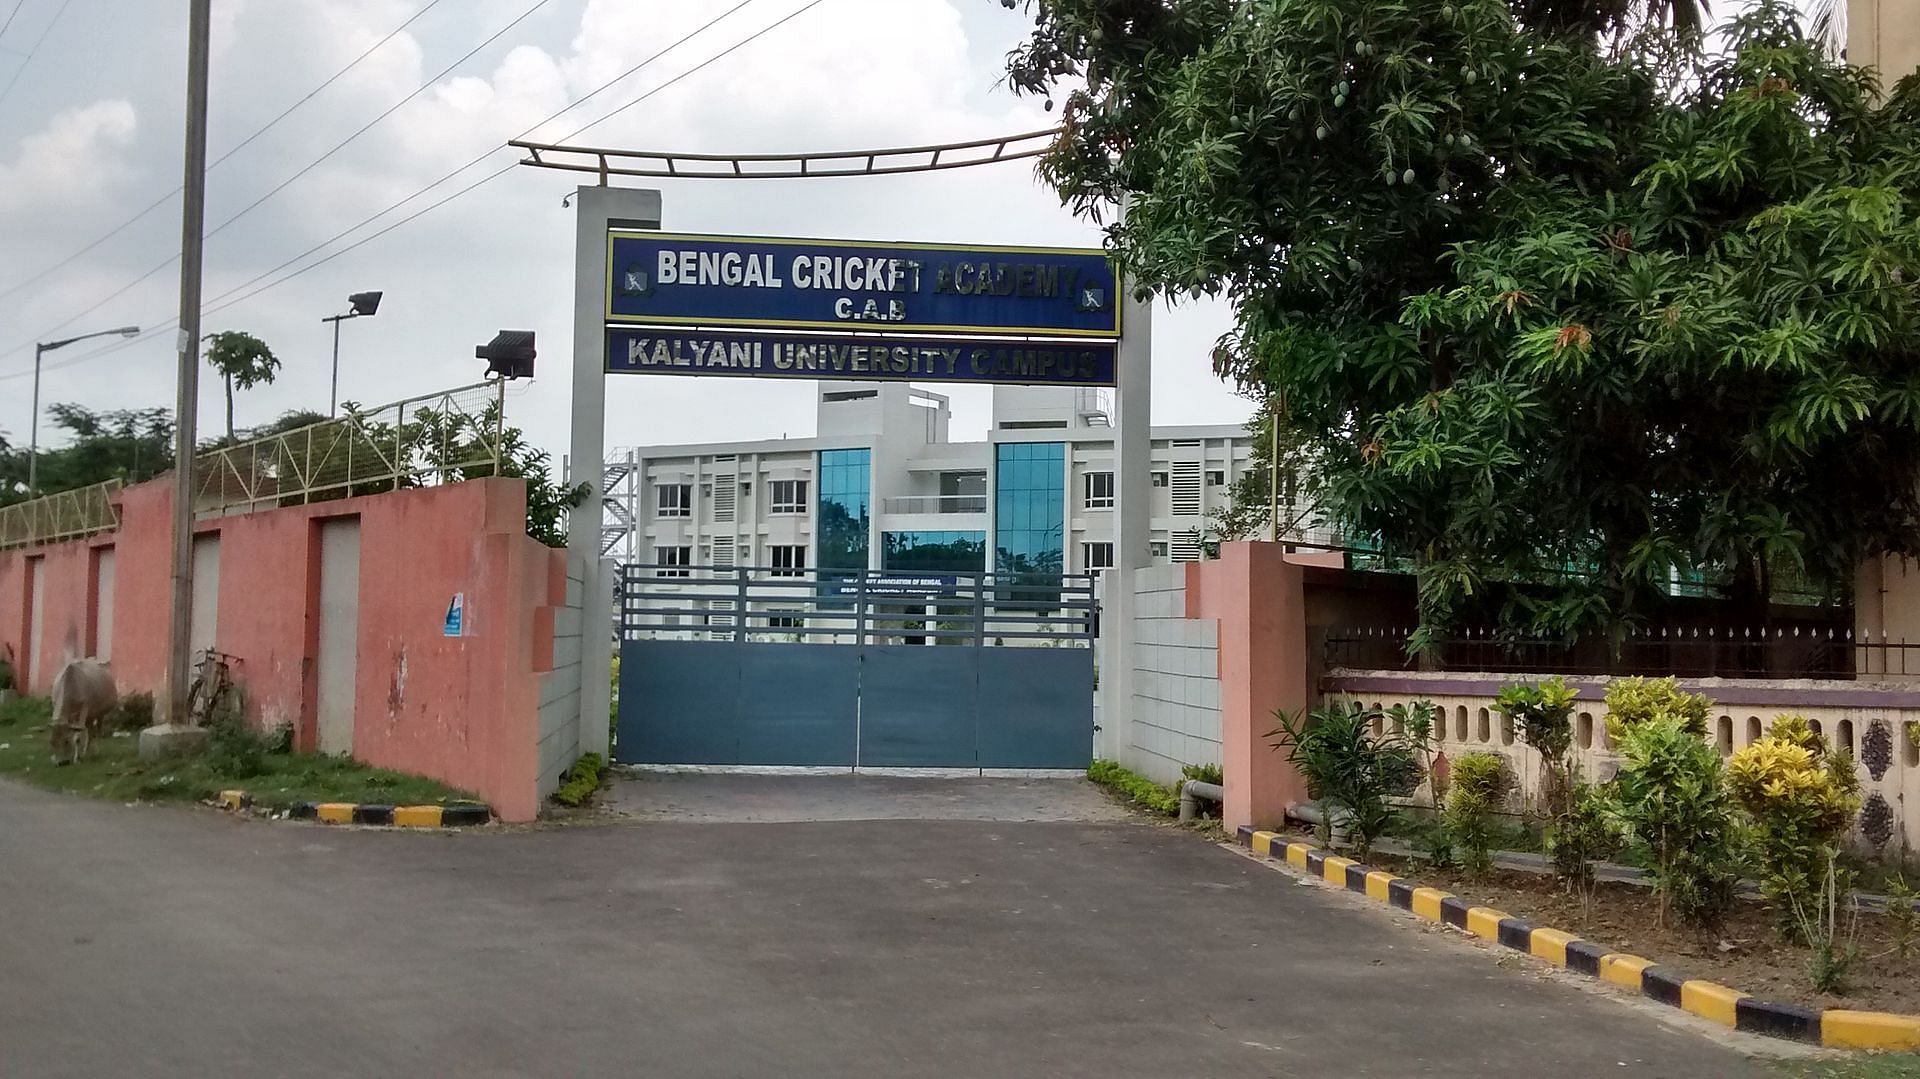 The BCA Stadium in Kalyani (Source: Wikipedia)